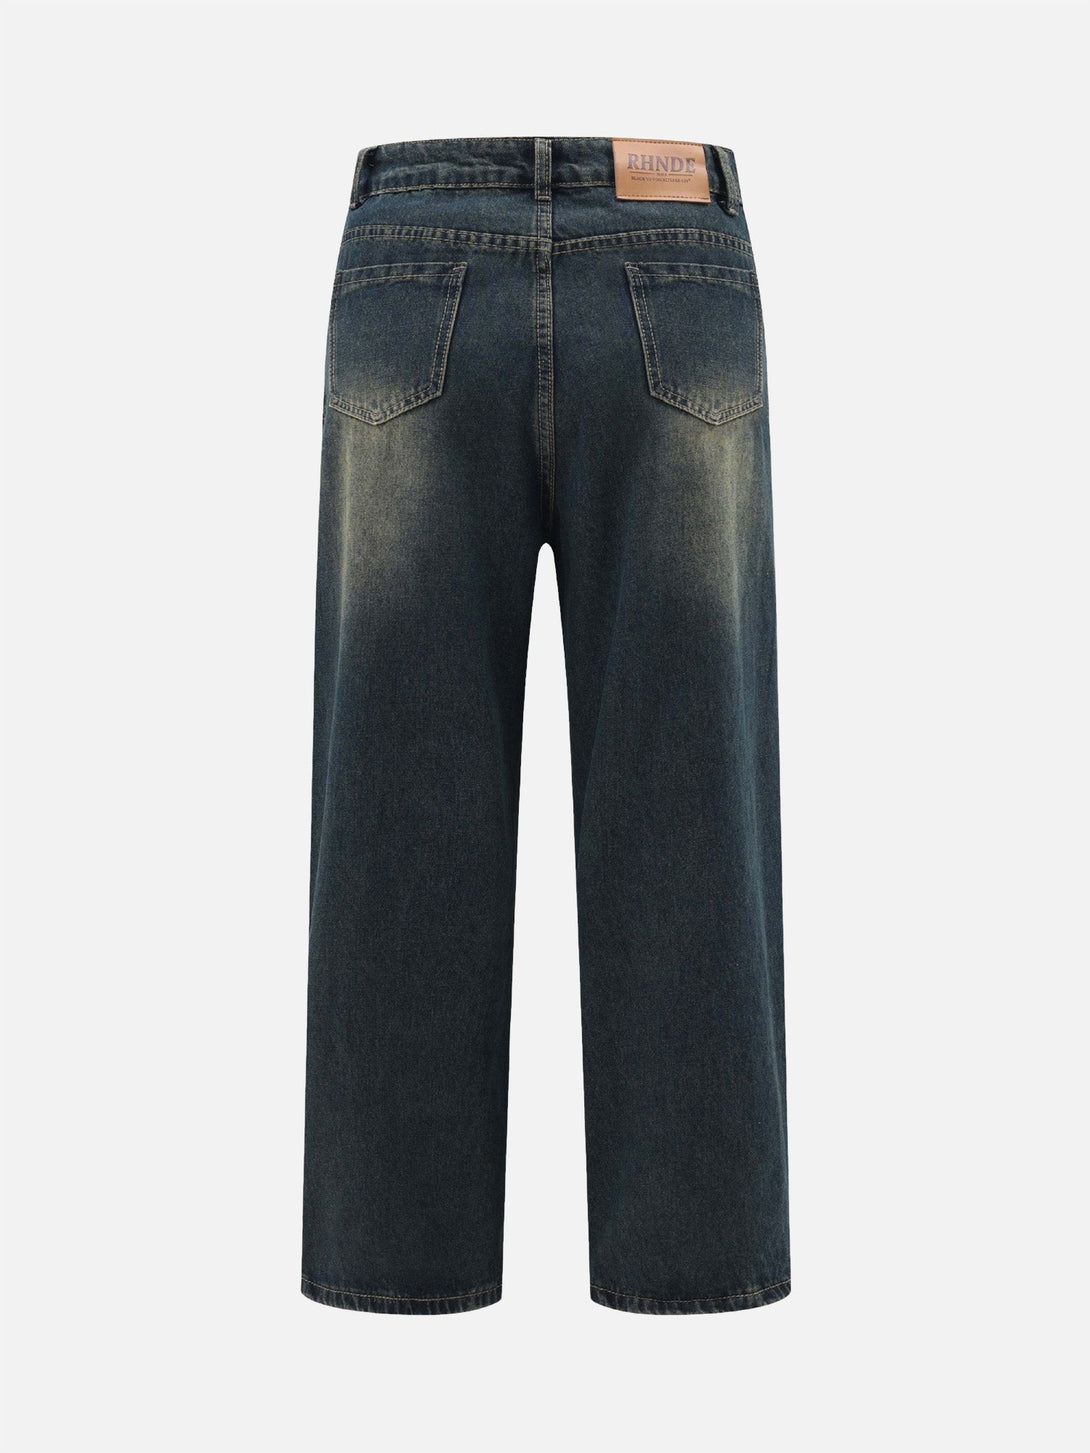 Majesda® - High Street American Tie Dye Star Bead Jeans- Outfit Ideas - Streetwear Fashion - majesda.com